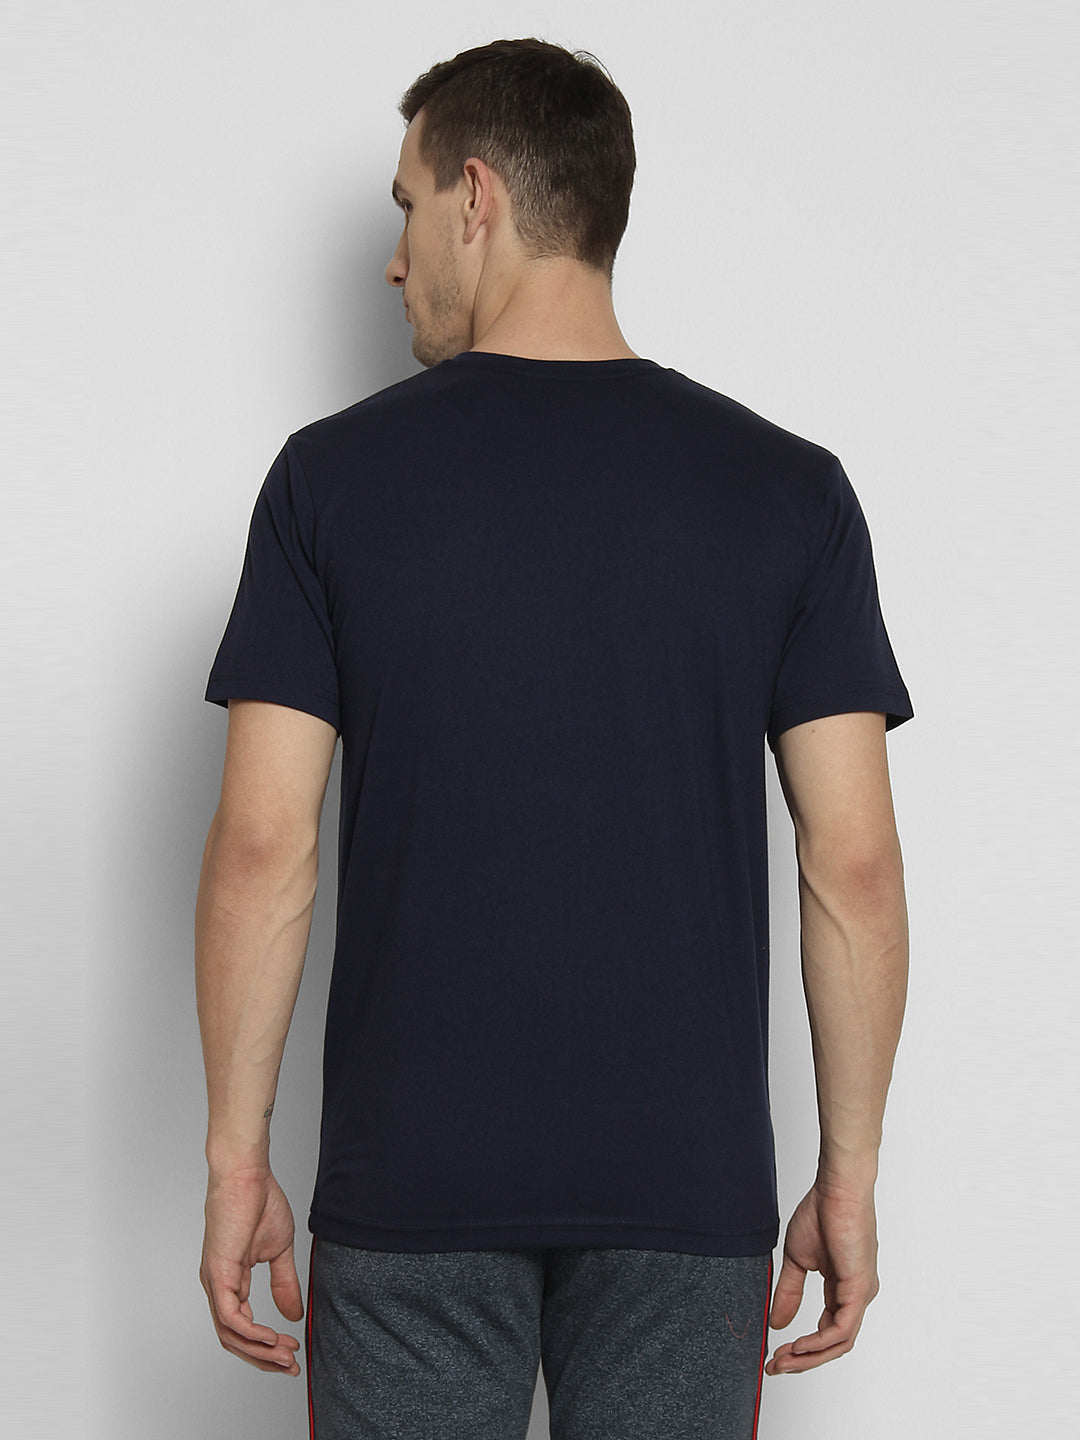 V Neck Printed T-Shirt For Men- Navy